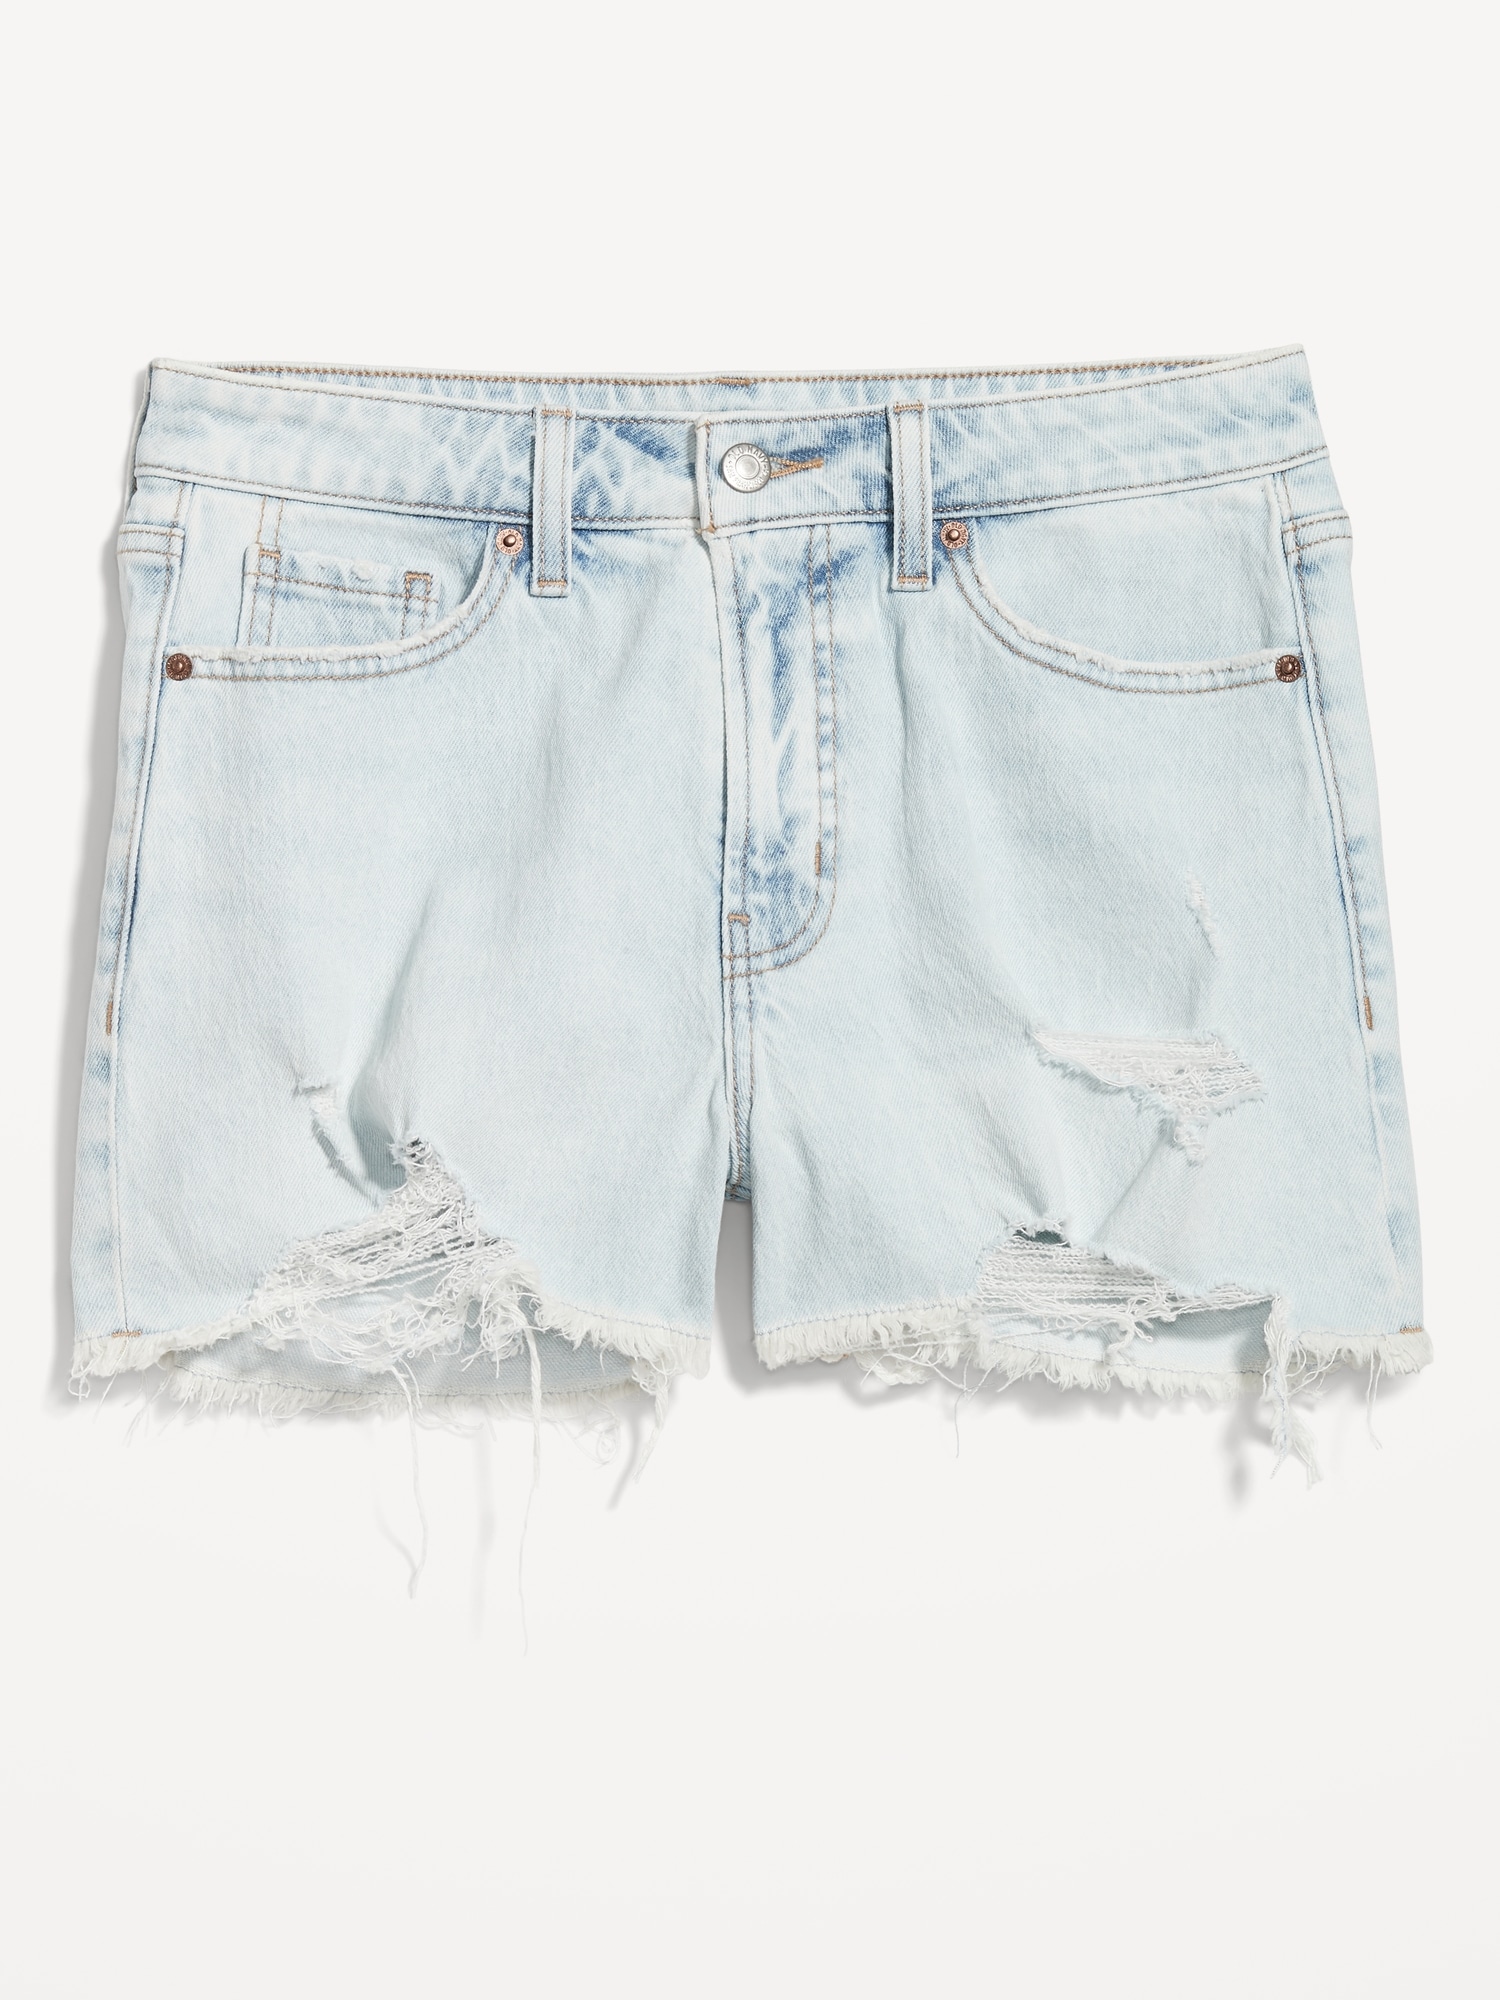 Plus Stretch Ripped Slim Bermuda Jean Shorts Denim – HER Plus Size by Ench